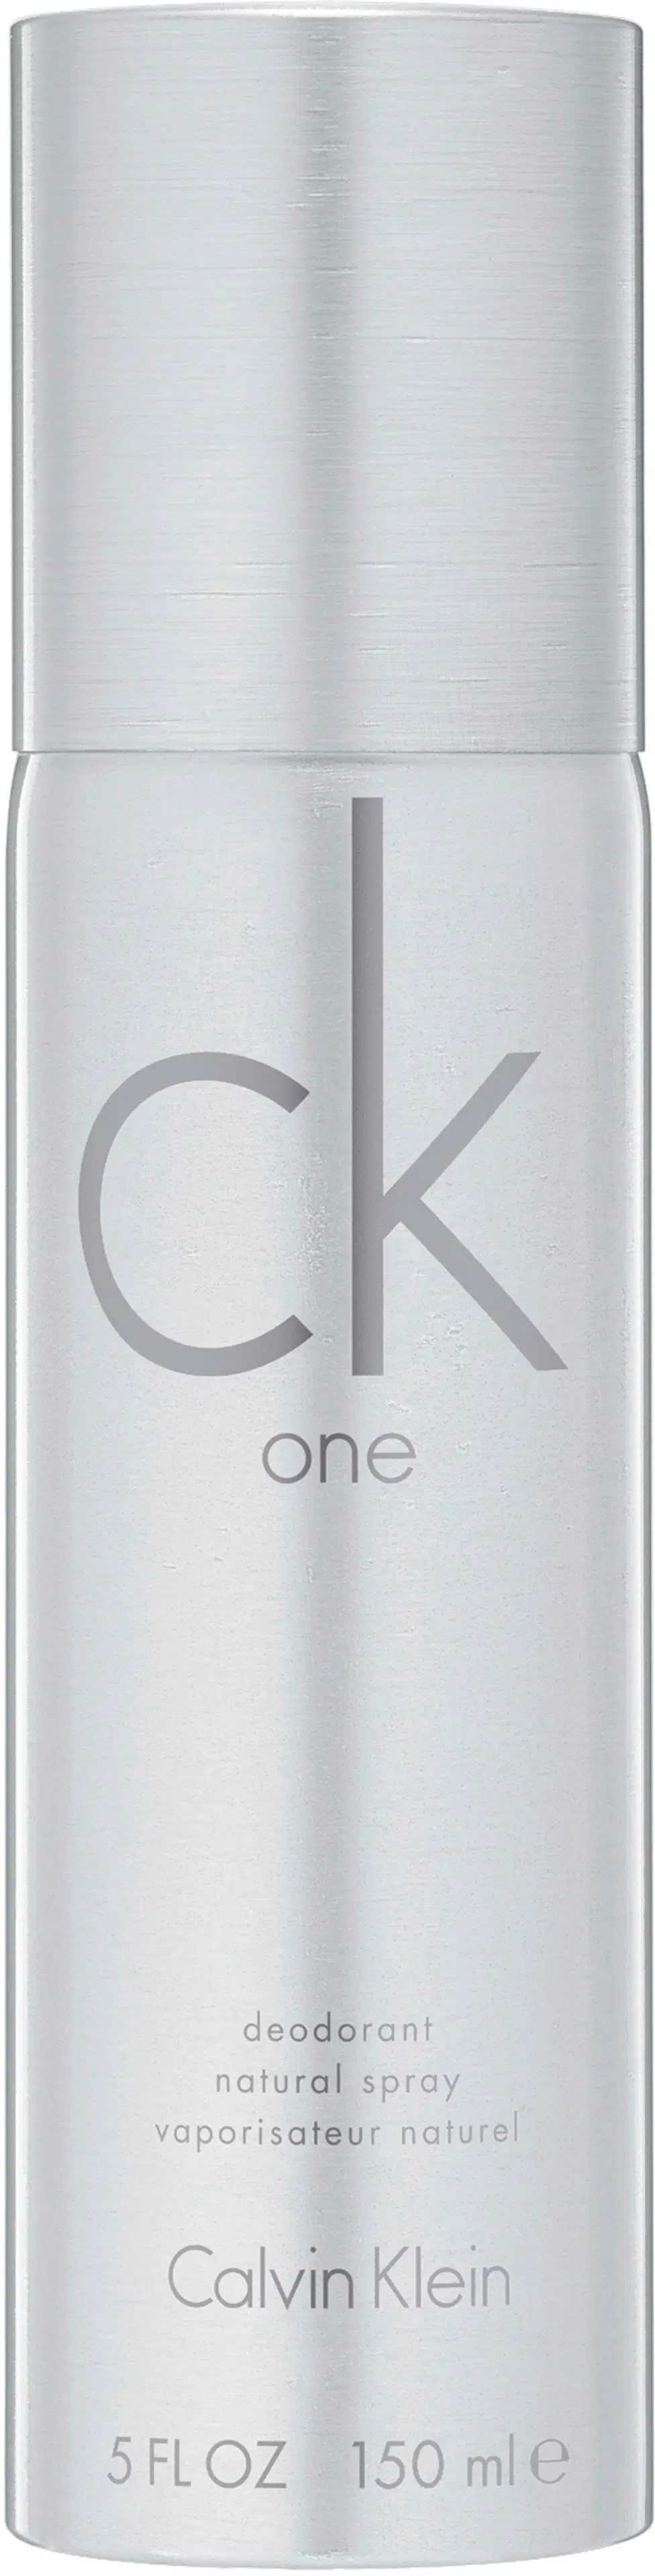 Calvin Klein cK One Deo Spray 150 ml